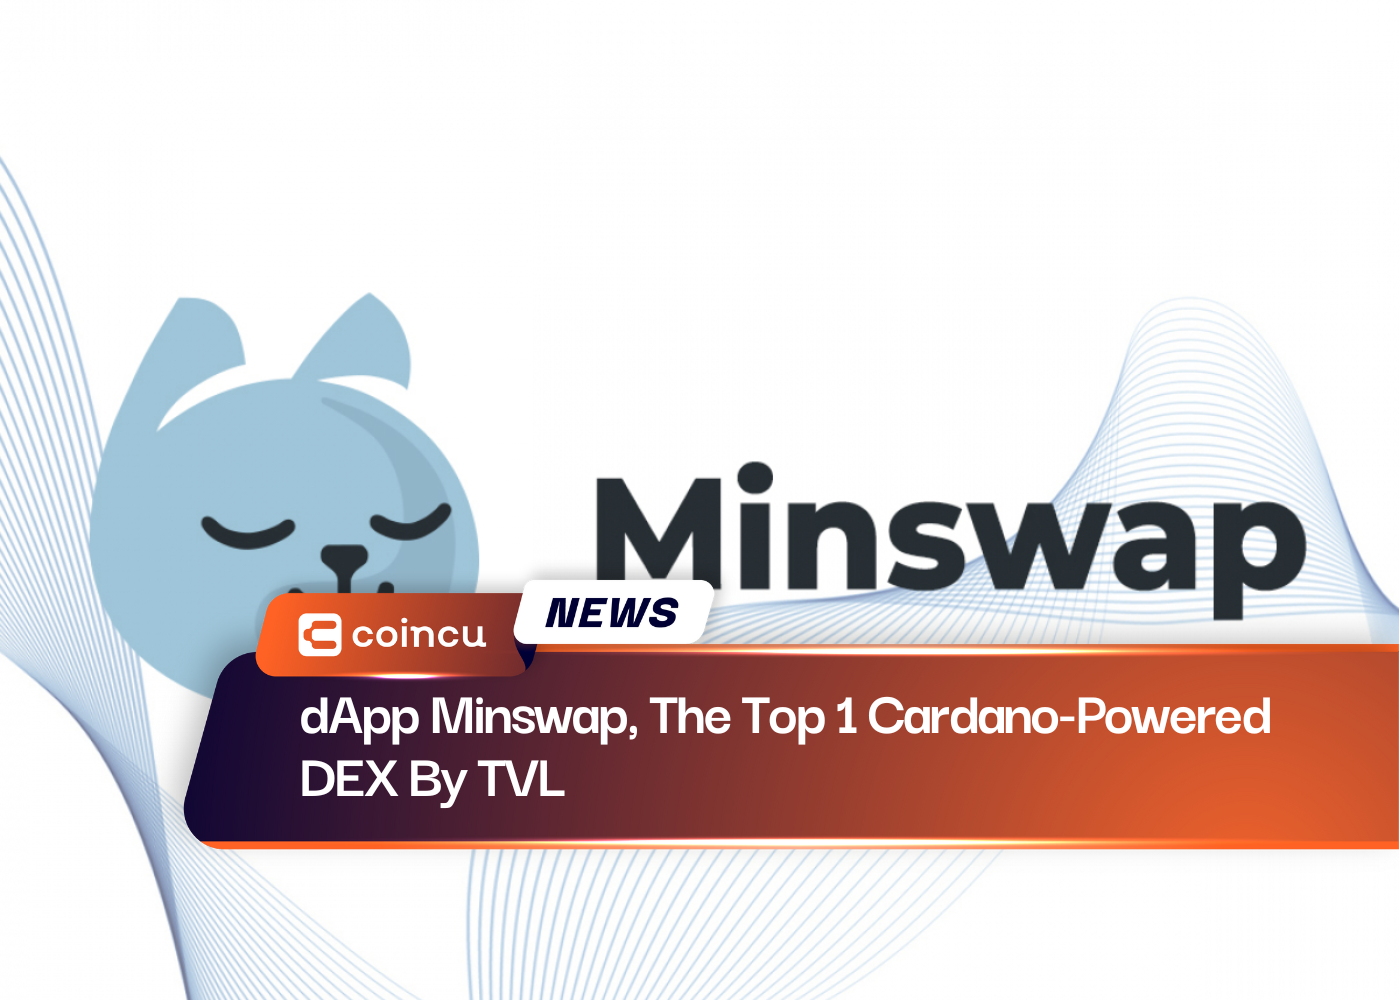 dApp Minswap, The Top 1 Cardano-Powered DEX By TVL